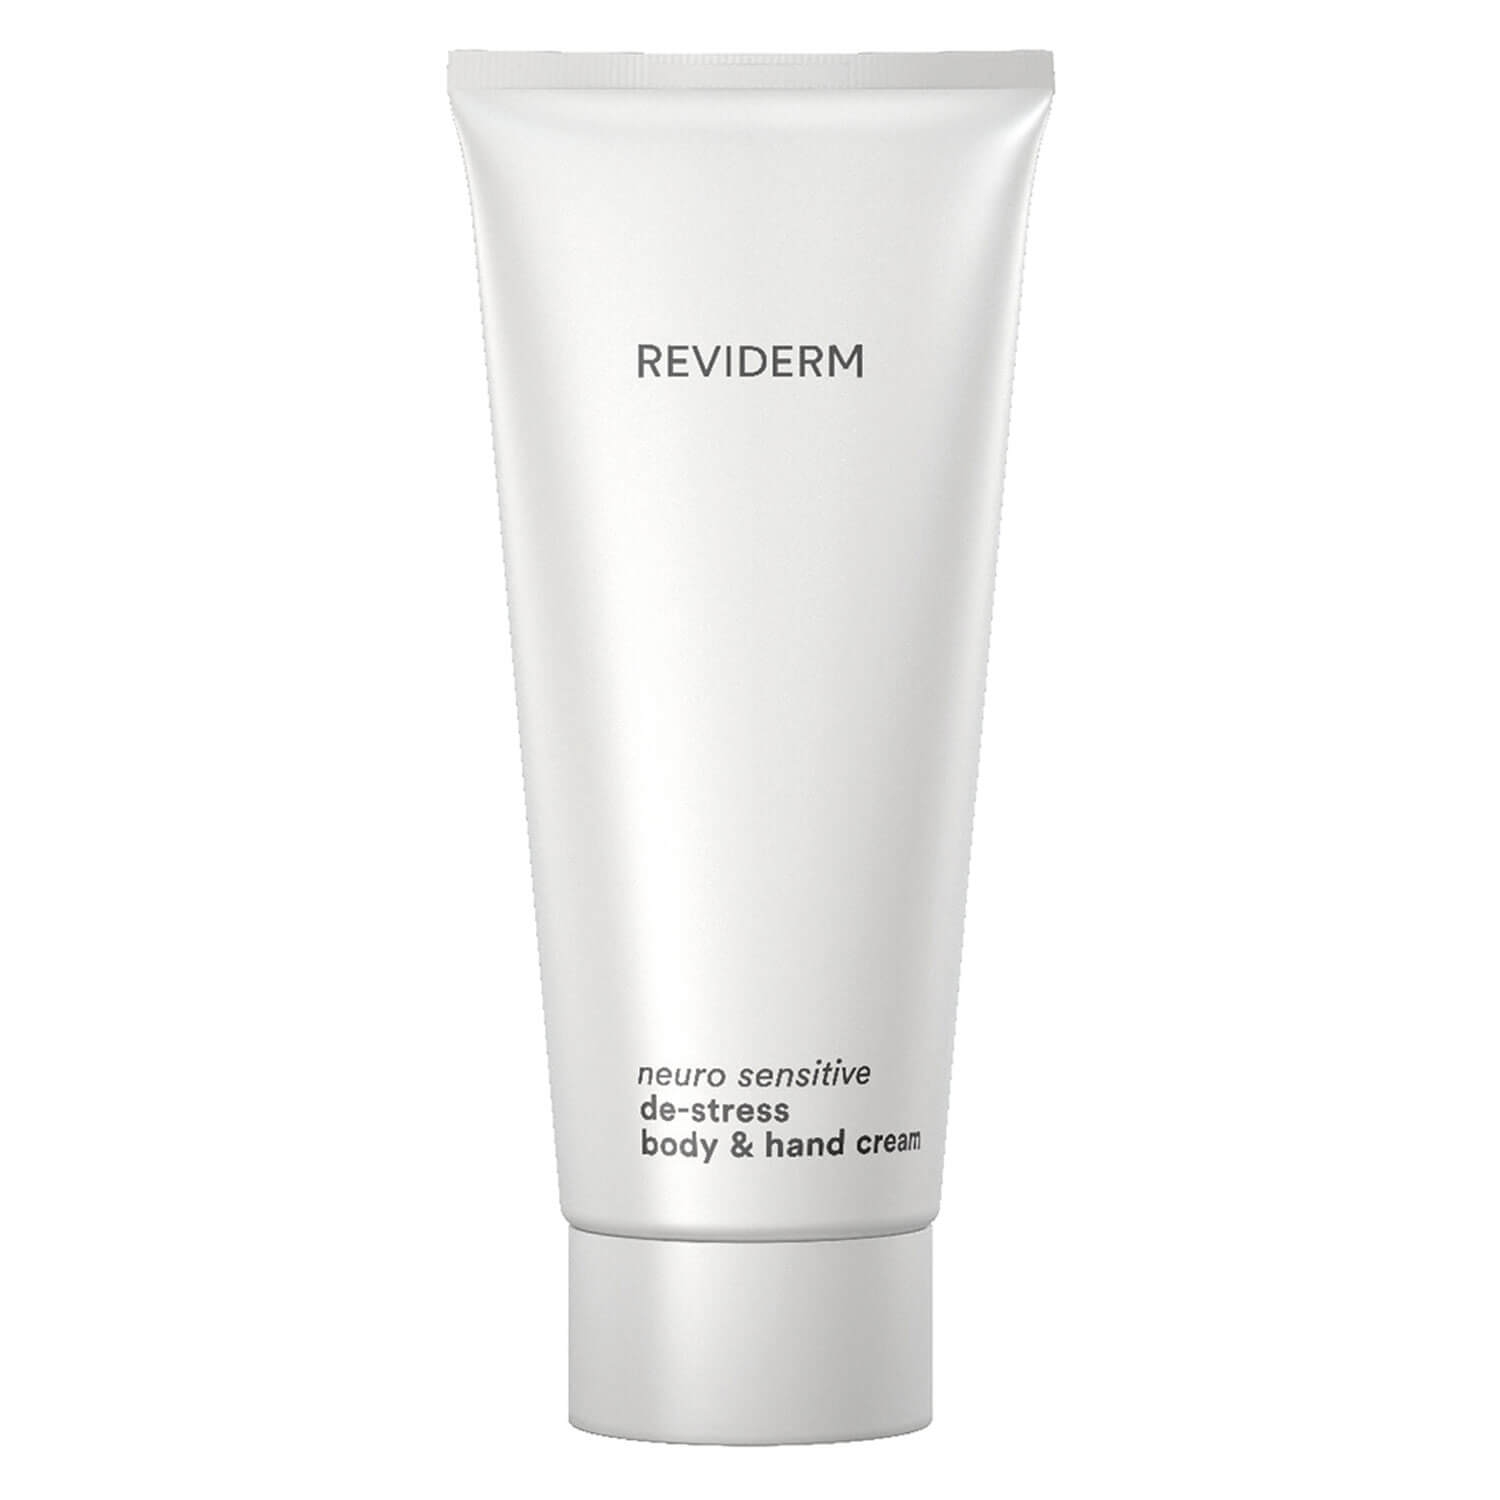 Product image from Reviderm Neuro Sensitive - de-stress body & hand cream